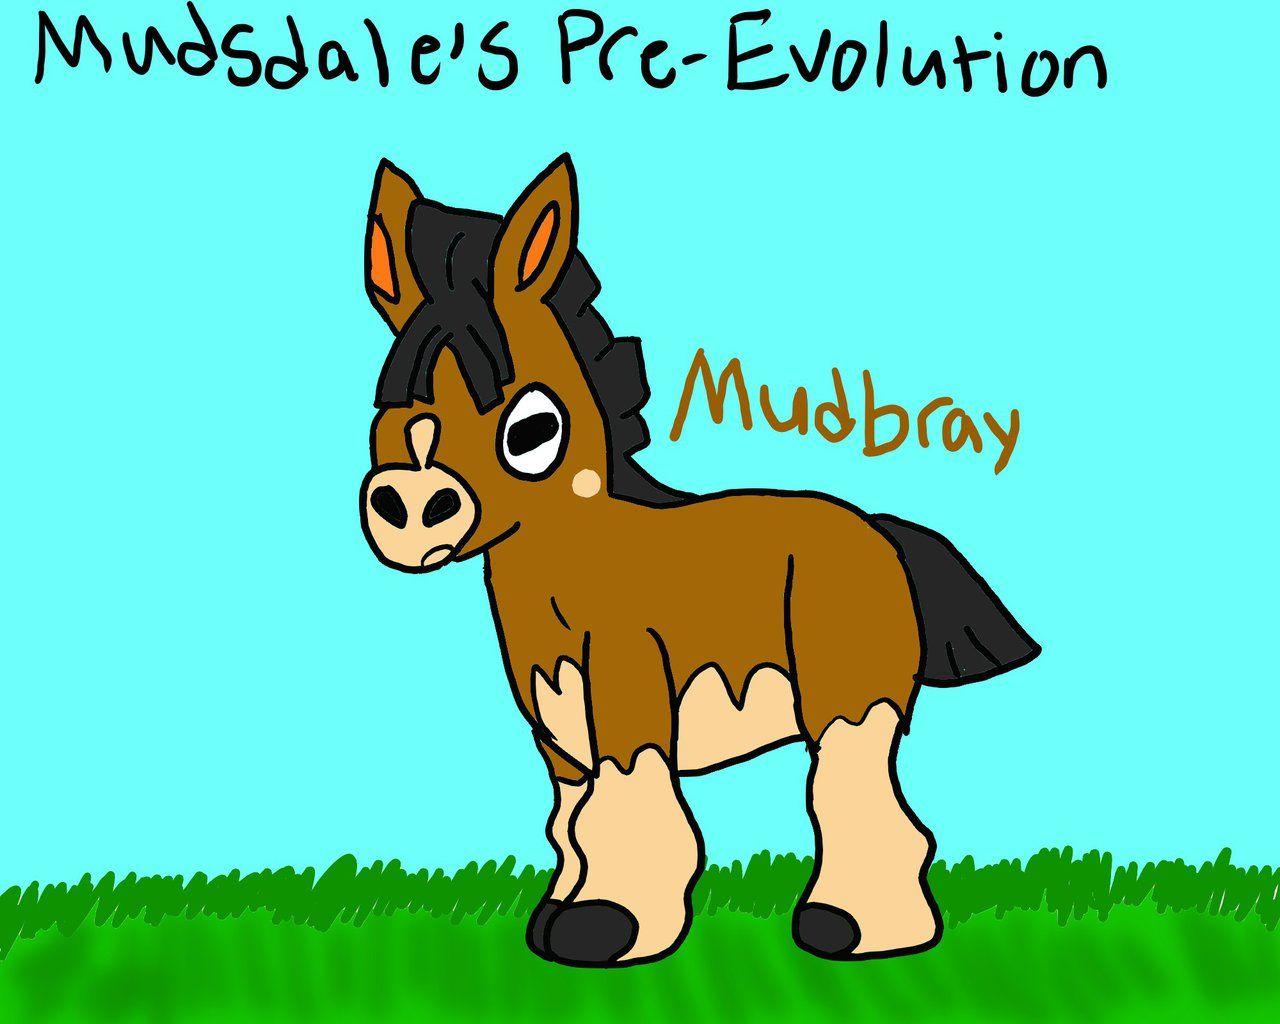 MudBray Baby Mudsdale